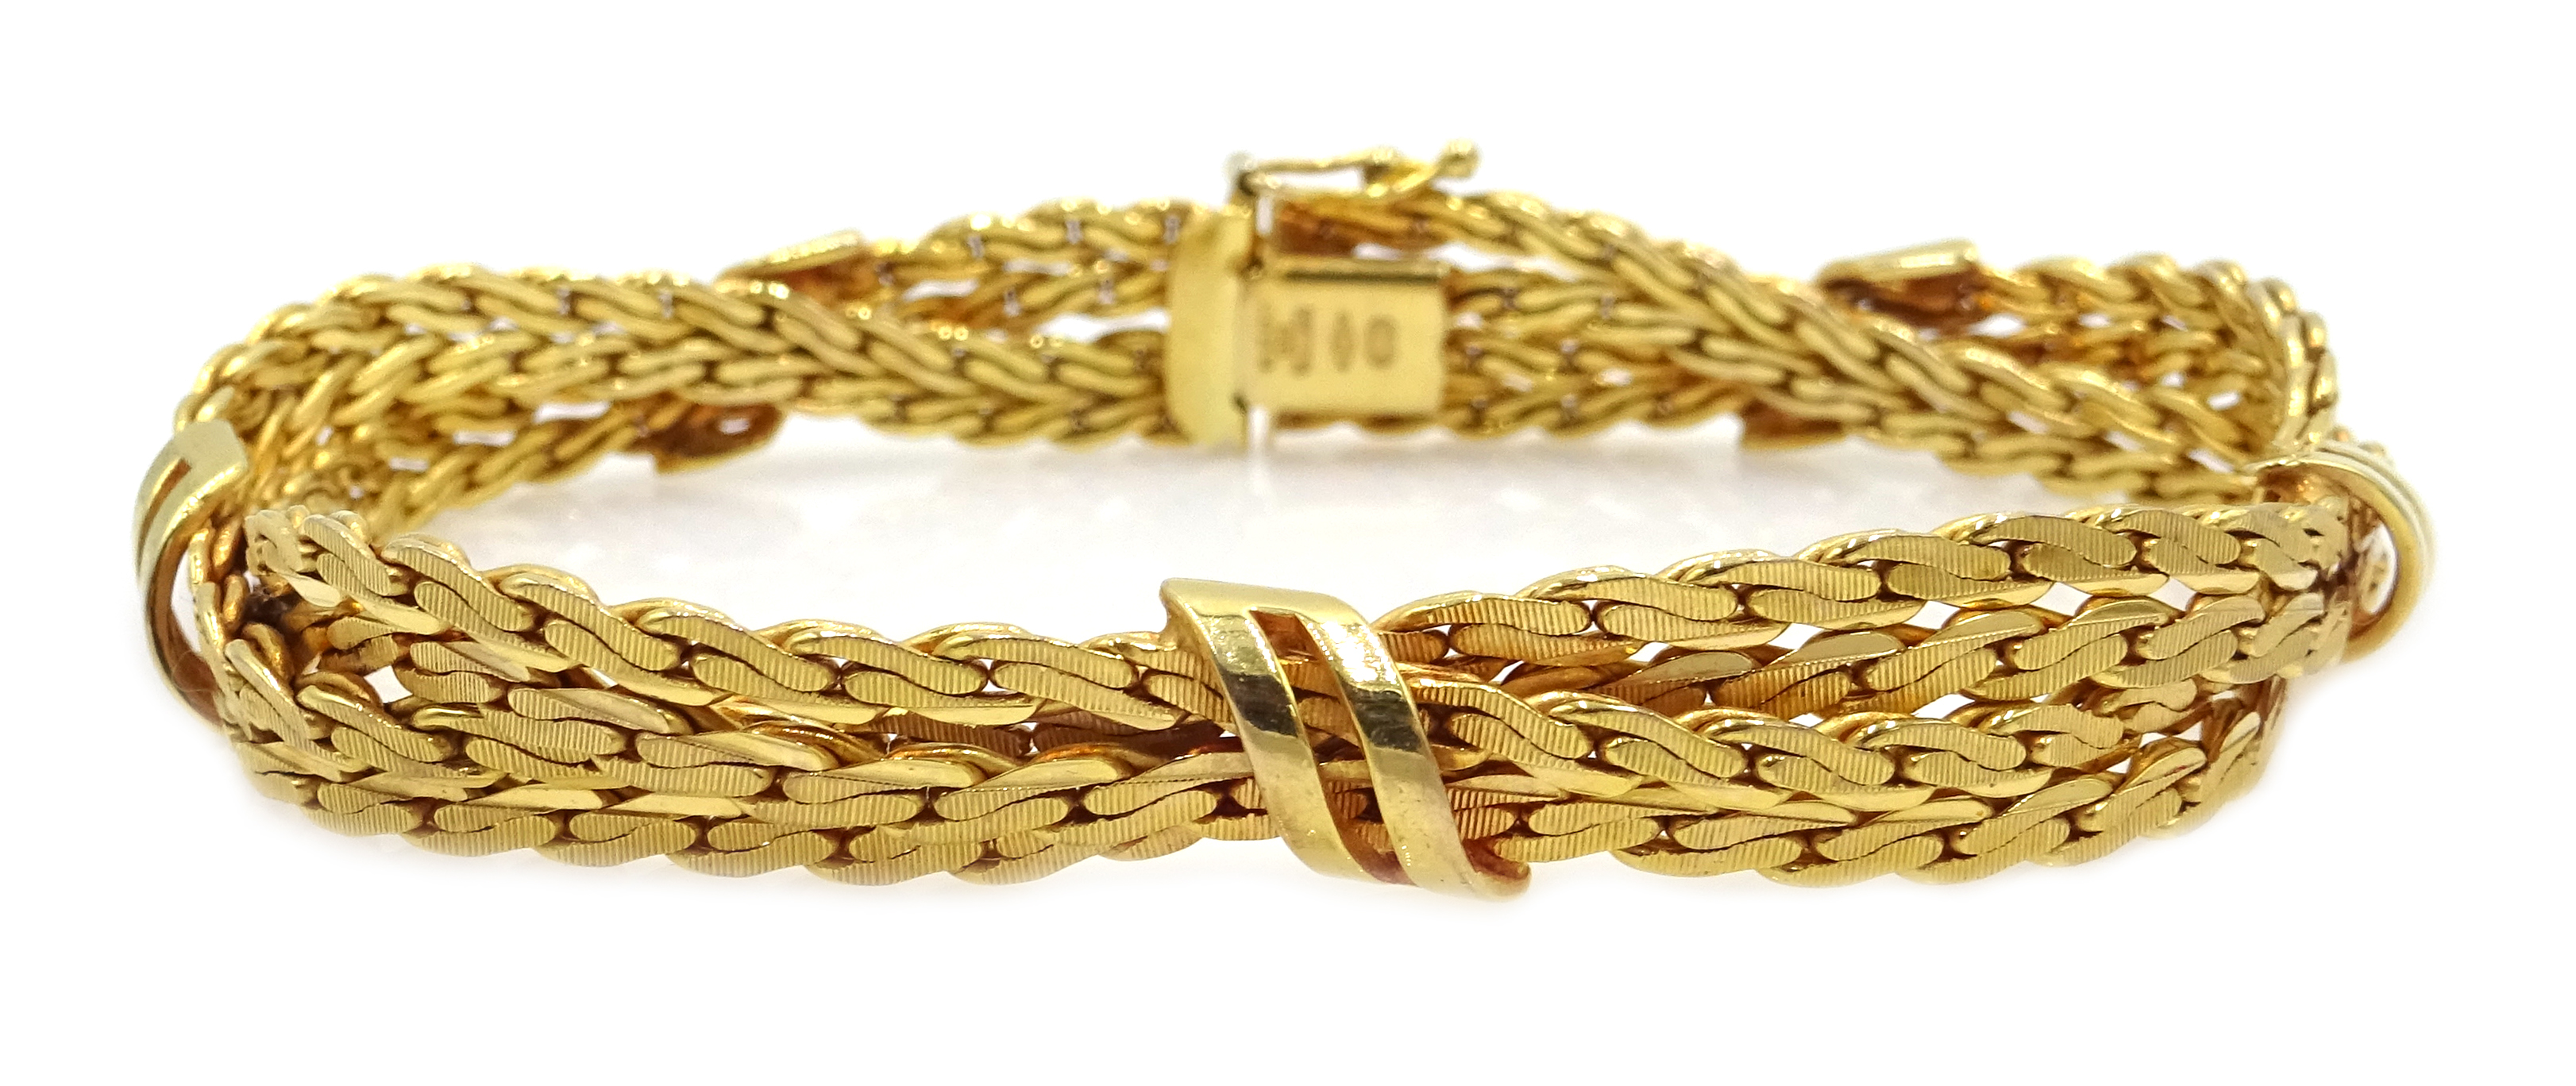 Gold link weave bracelet hallmarked 9ct, approx 25.